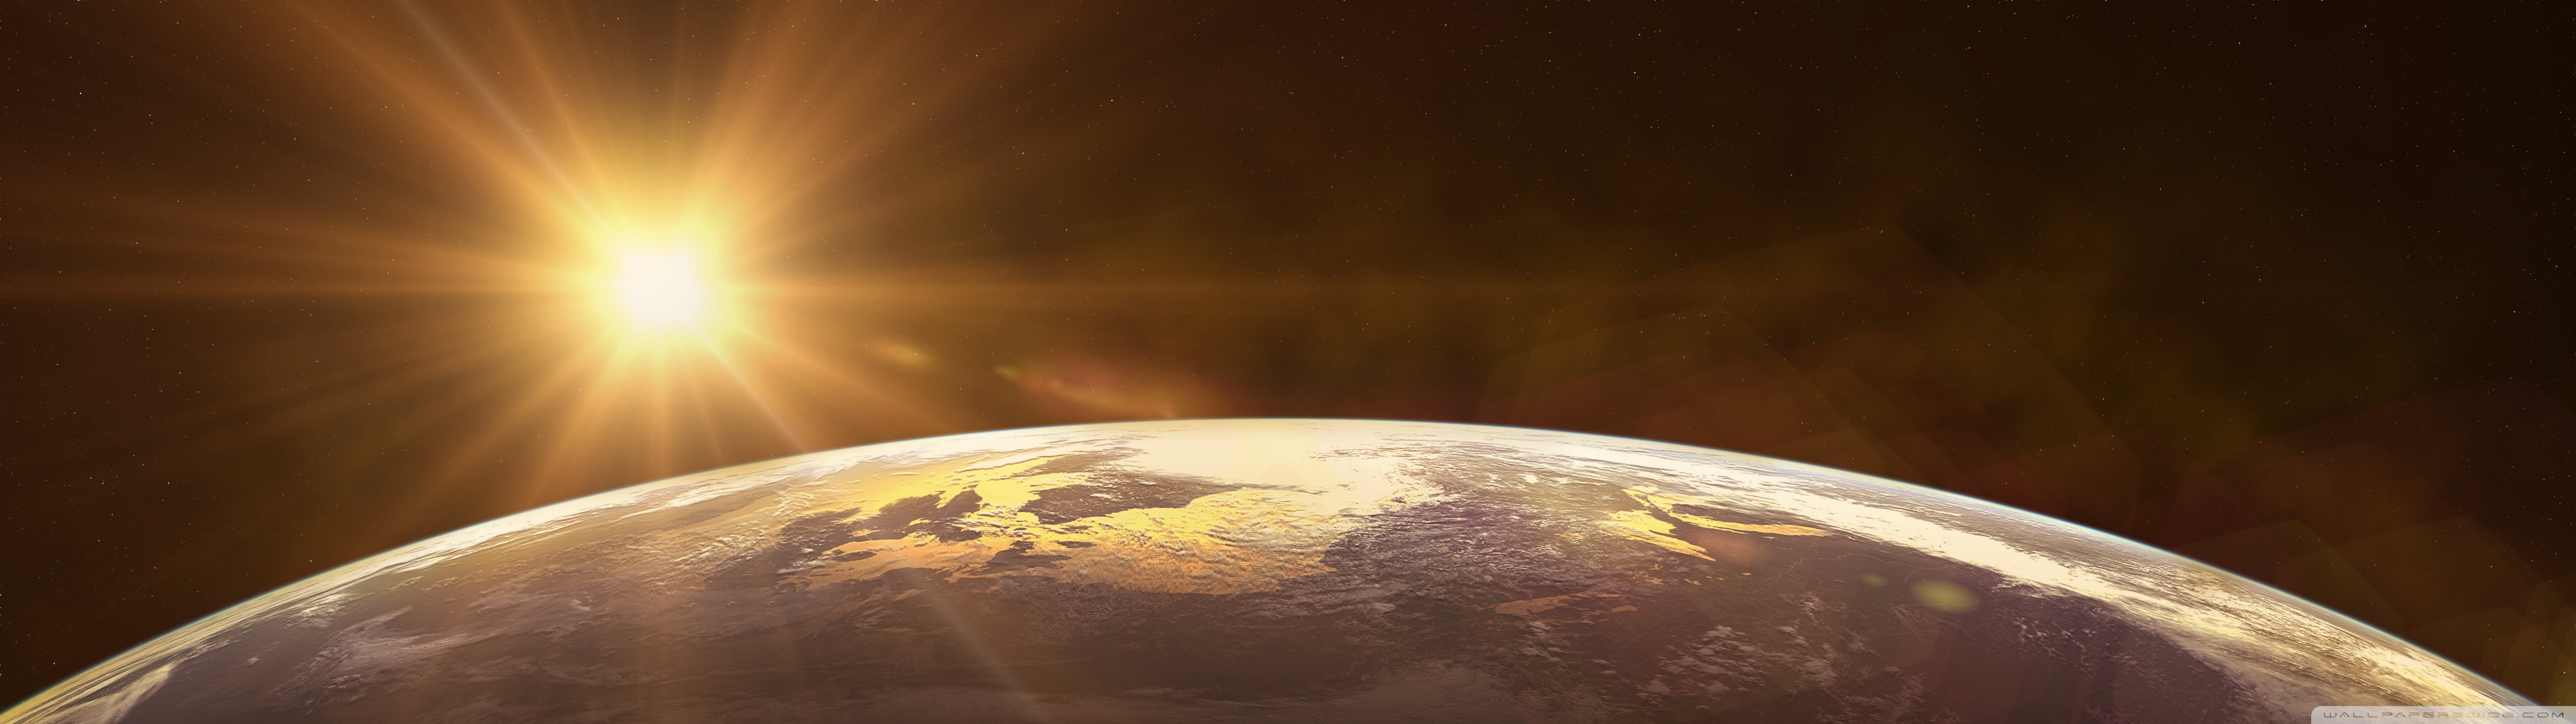 fondo de pantalla de monitor dual,atmósfera,planeta,espacio exterior,tierra,cielo